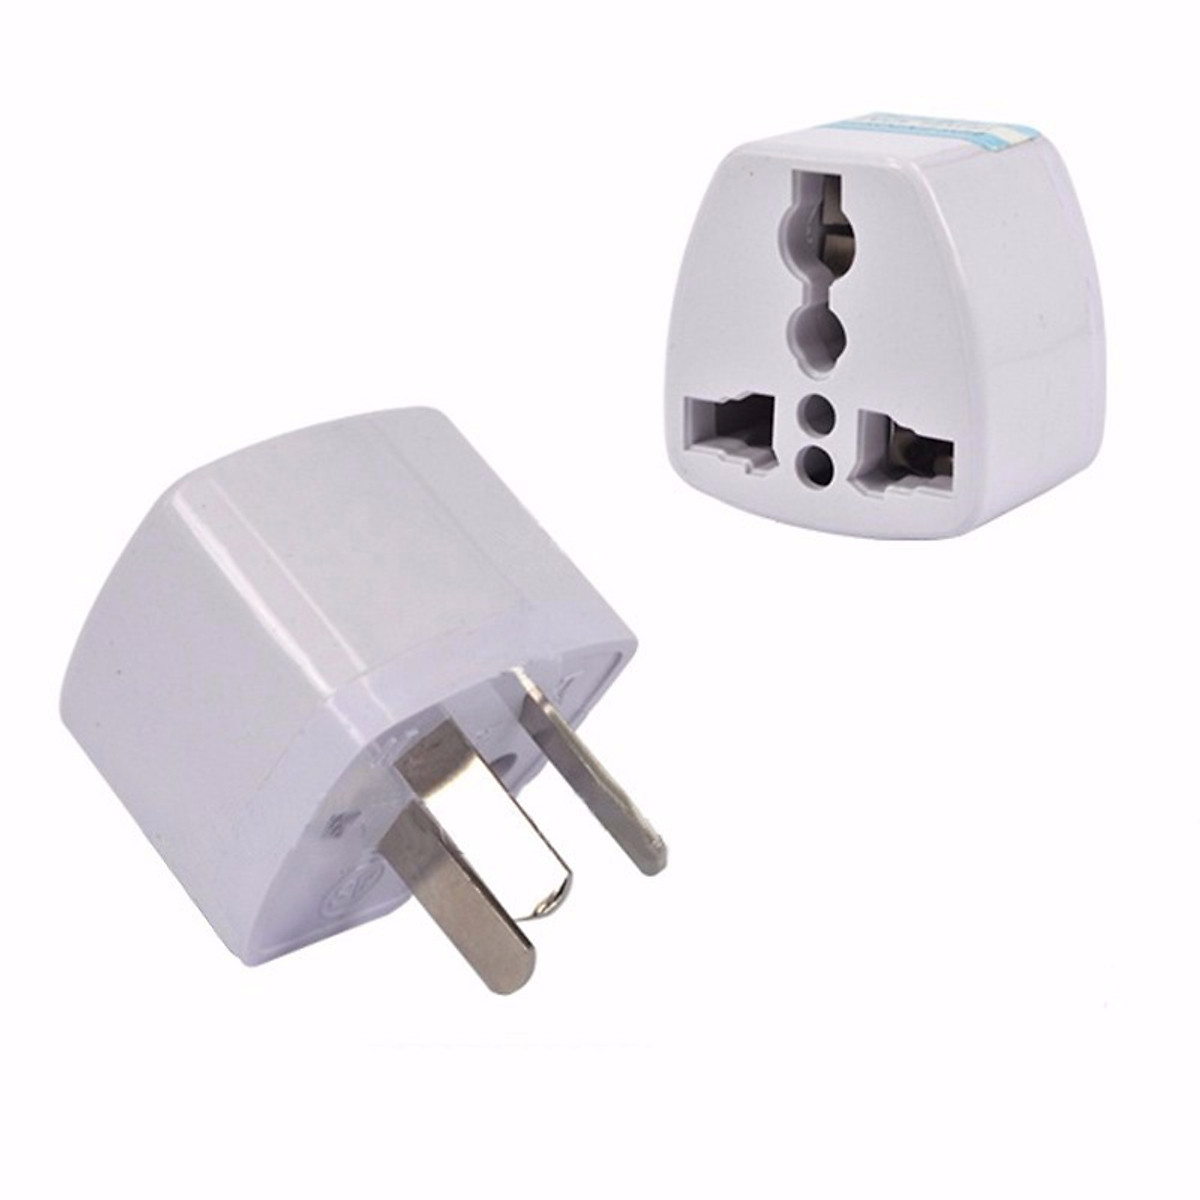 Mua Universal Power Adapter Travel Adaptor 3 pin AU Converter US/UK/EU to  AU Plug Charger For Australia